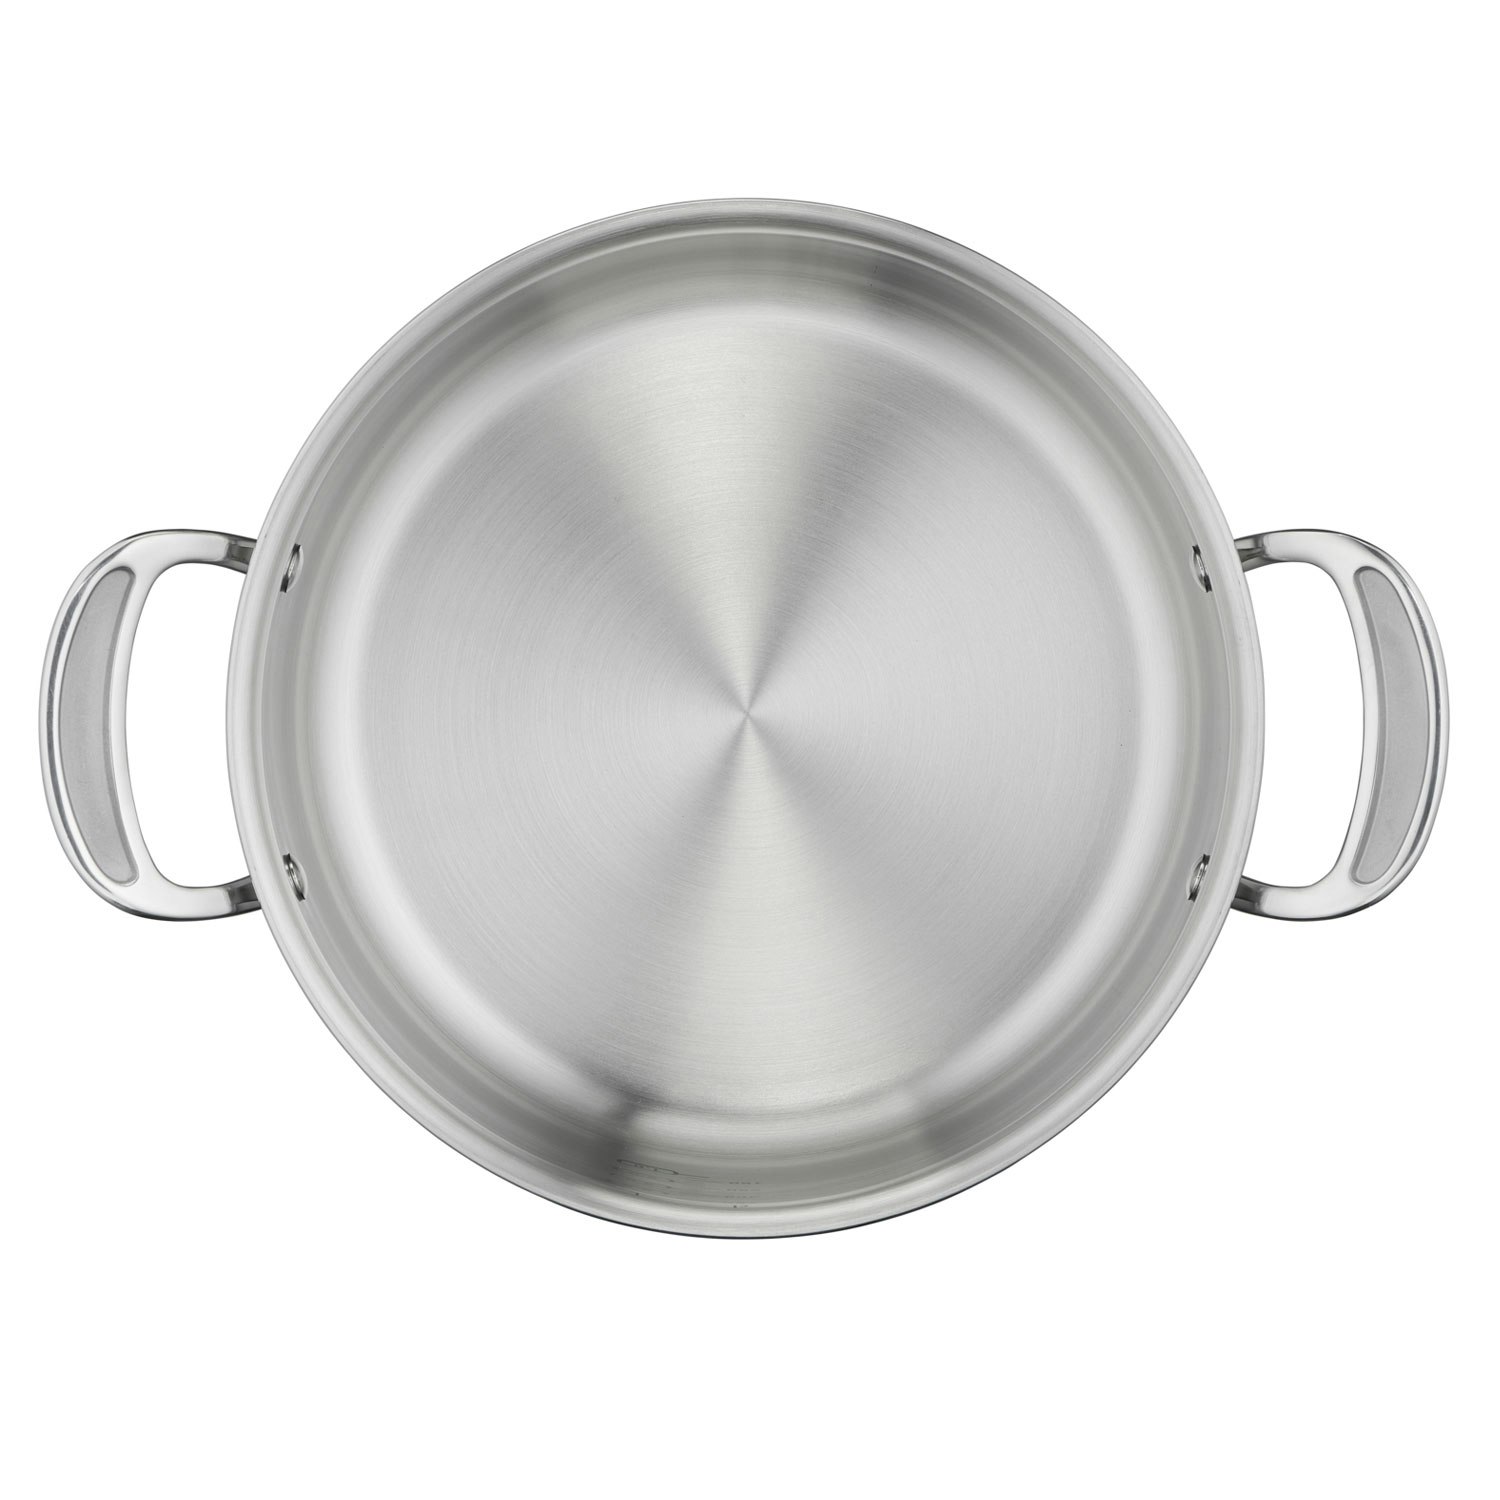 https://royaldesign.com/image/2/tefal-jamie-oliver-cooks-classic-pot-set-stainless-steel-7-pieces-1